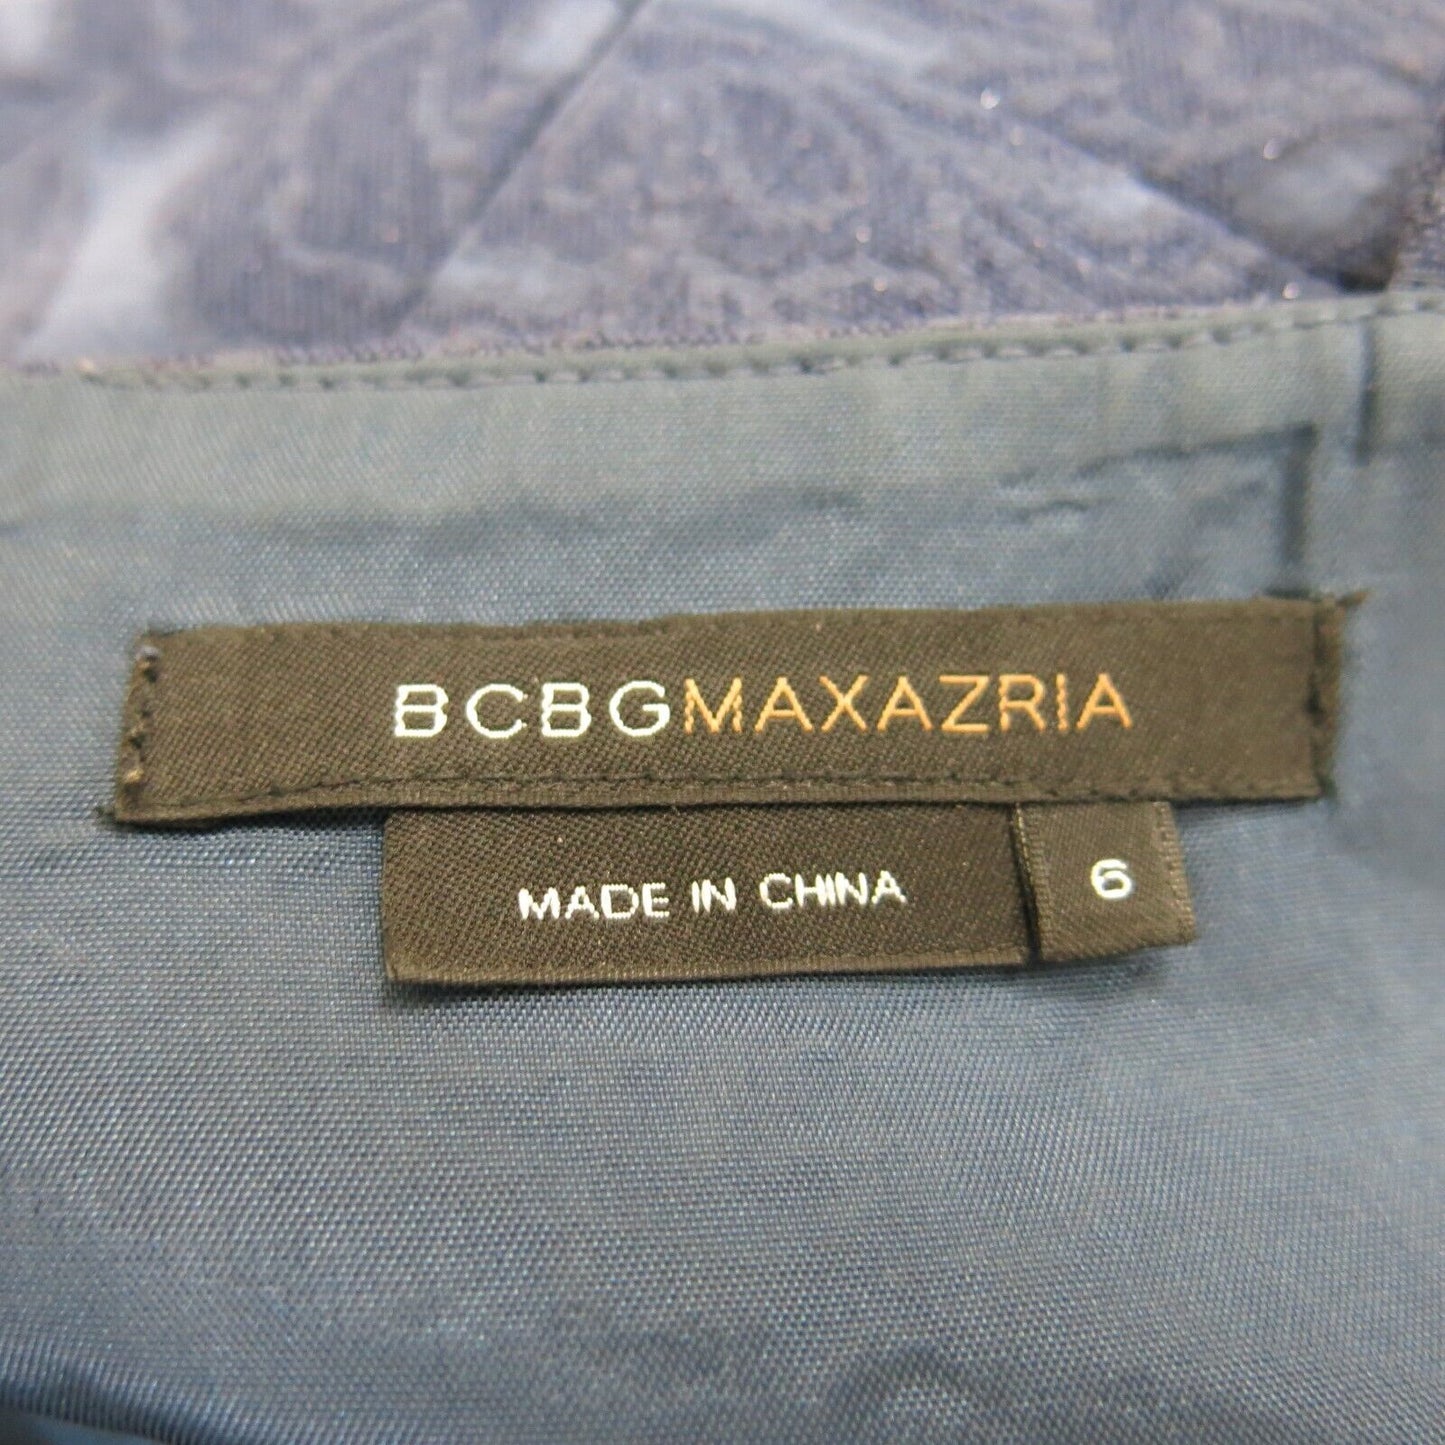 BCBZ Maxa Zaria Womens Floral Shift Mini Dress Sleeveless Slate Blue Size 6